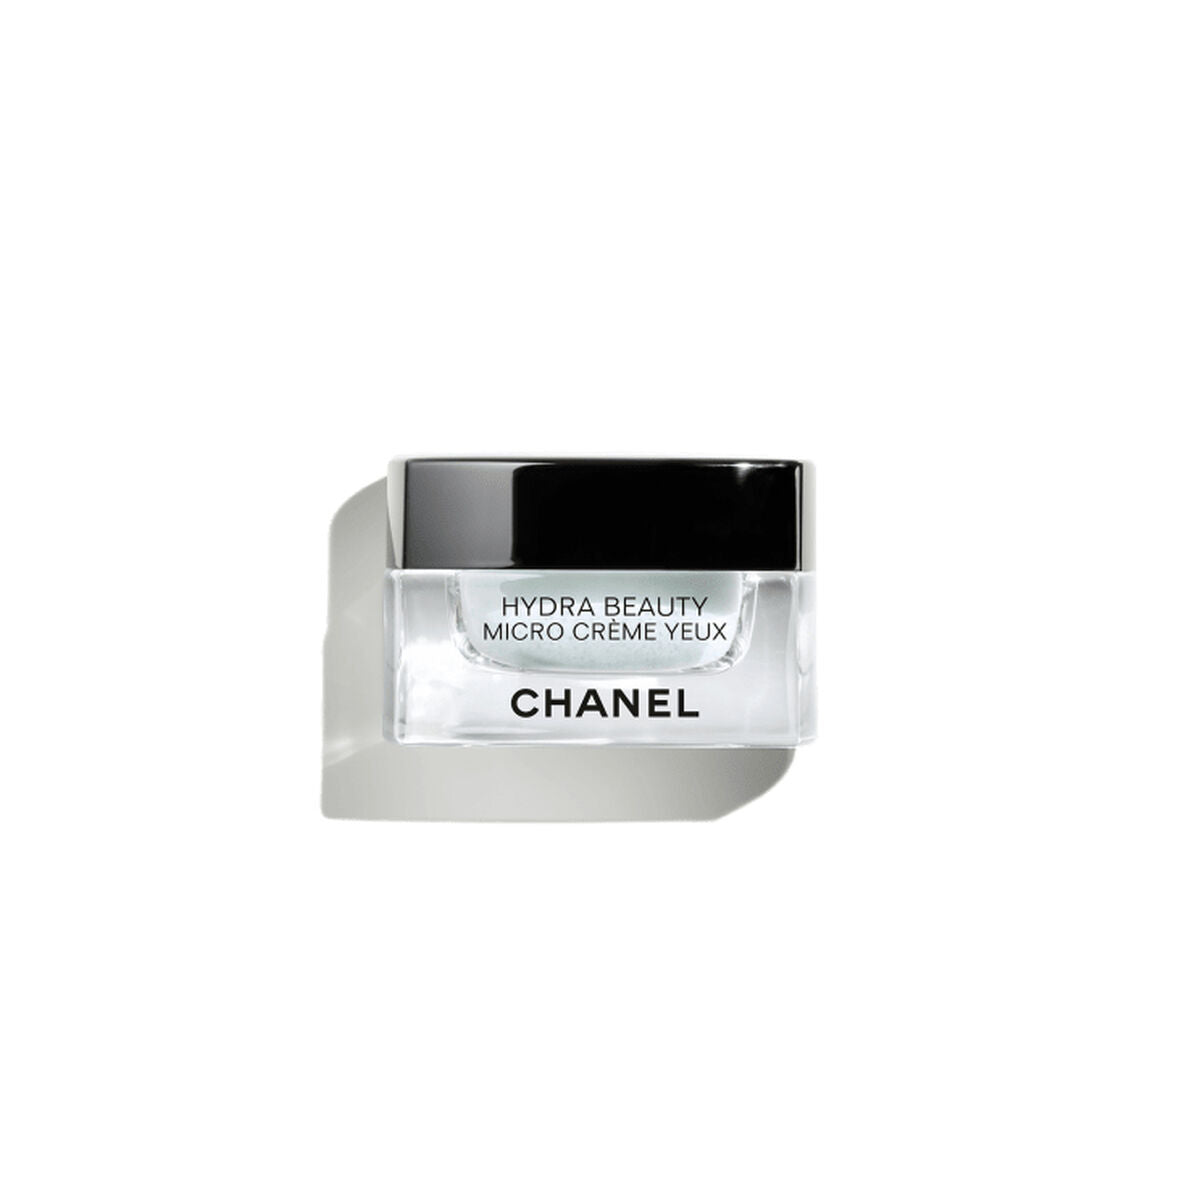 Kaufe Anti-Agingcreme für Augenkontur Chanel Hydra Beauty bei AWK Flagship um € 90.00